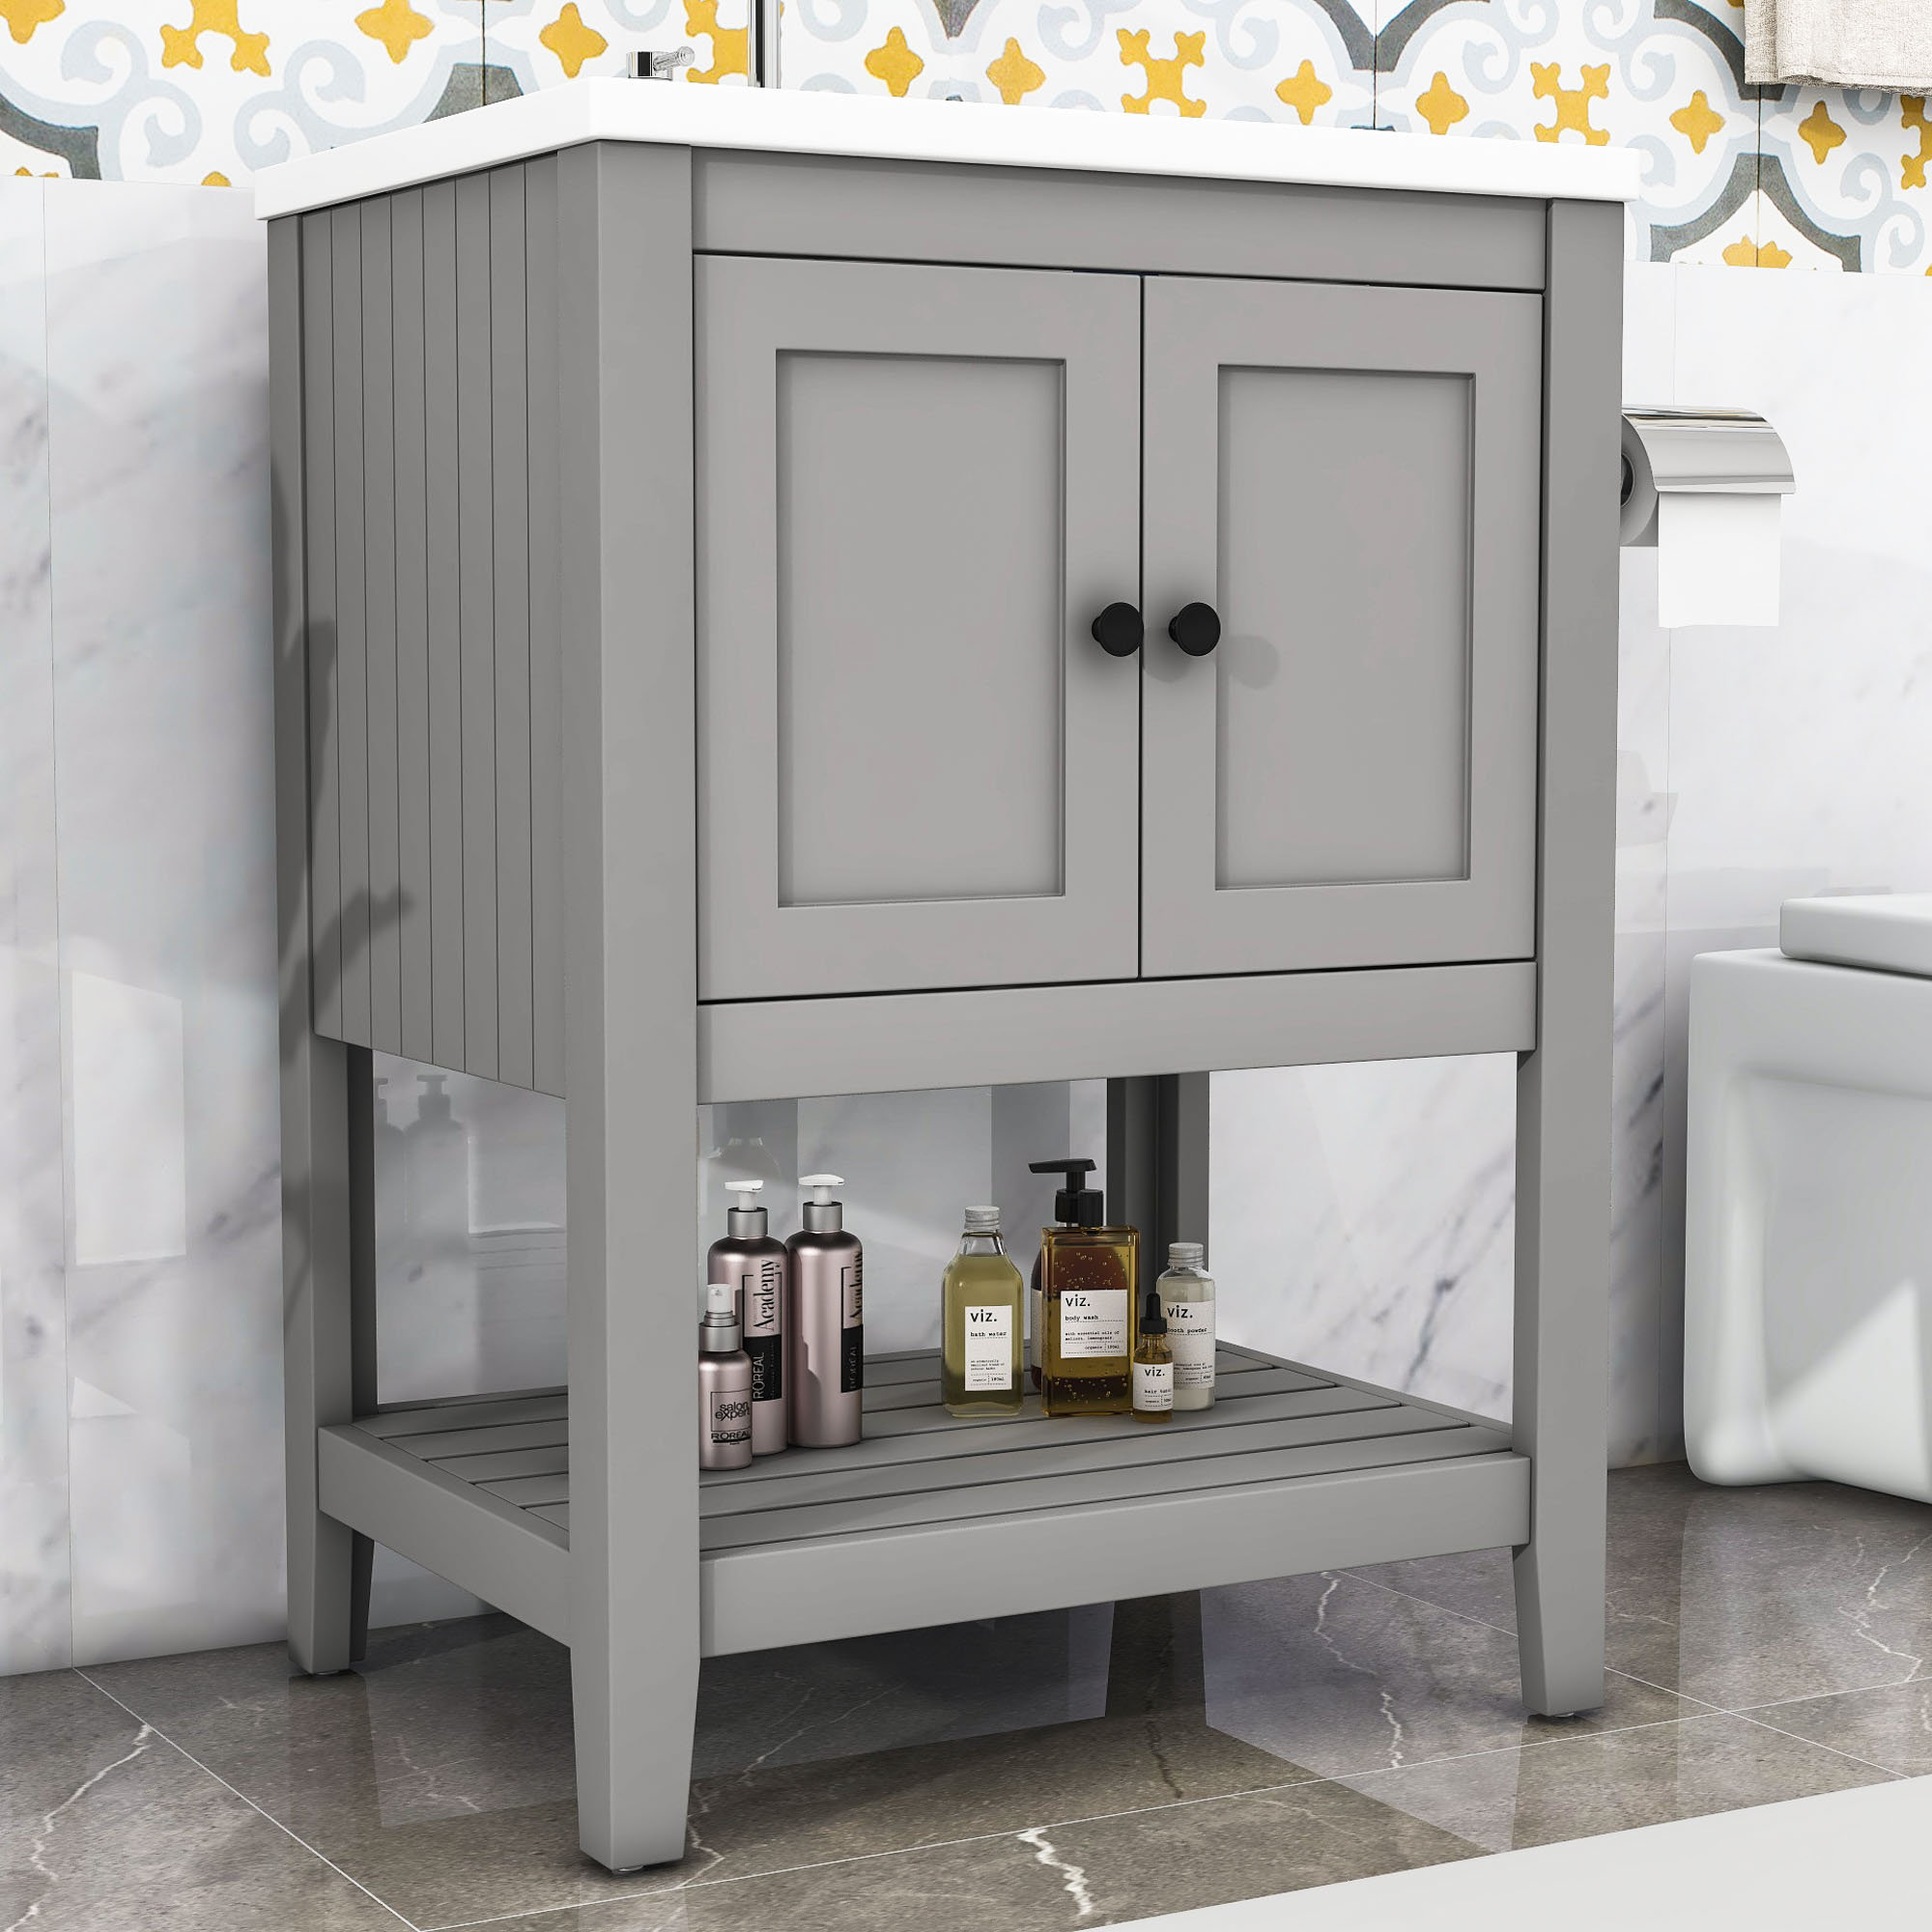 17.8 in. W x 23.7 in. D x 33.6 in. H Bathroom Vanity Ceramic Sink with Wood Frame Open Style Shelf Vanity Top in Gray